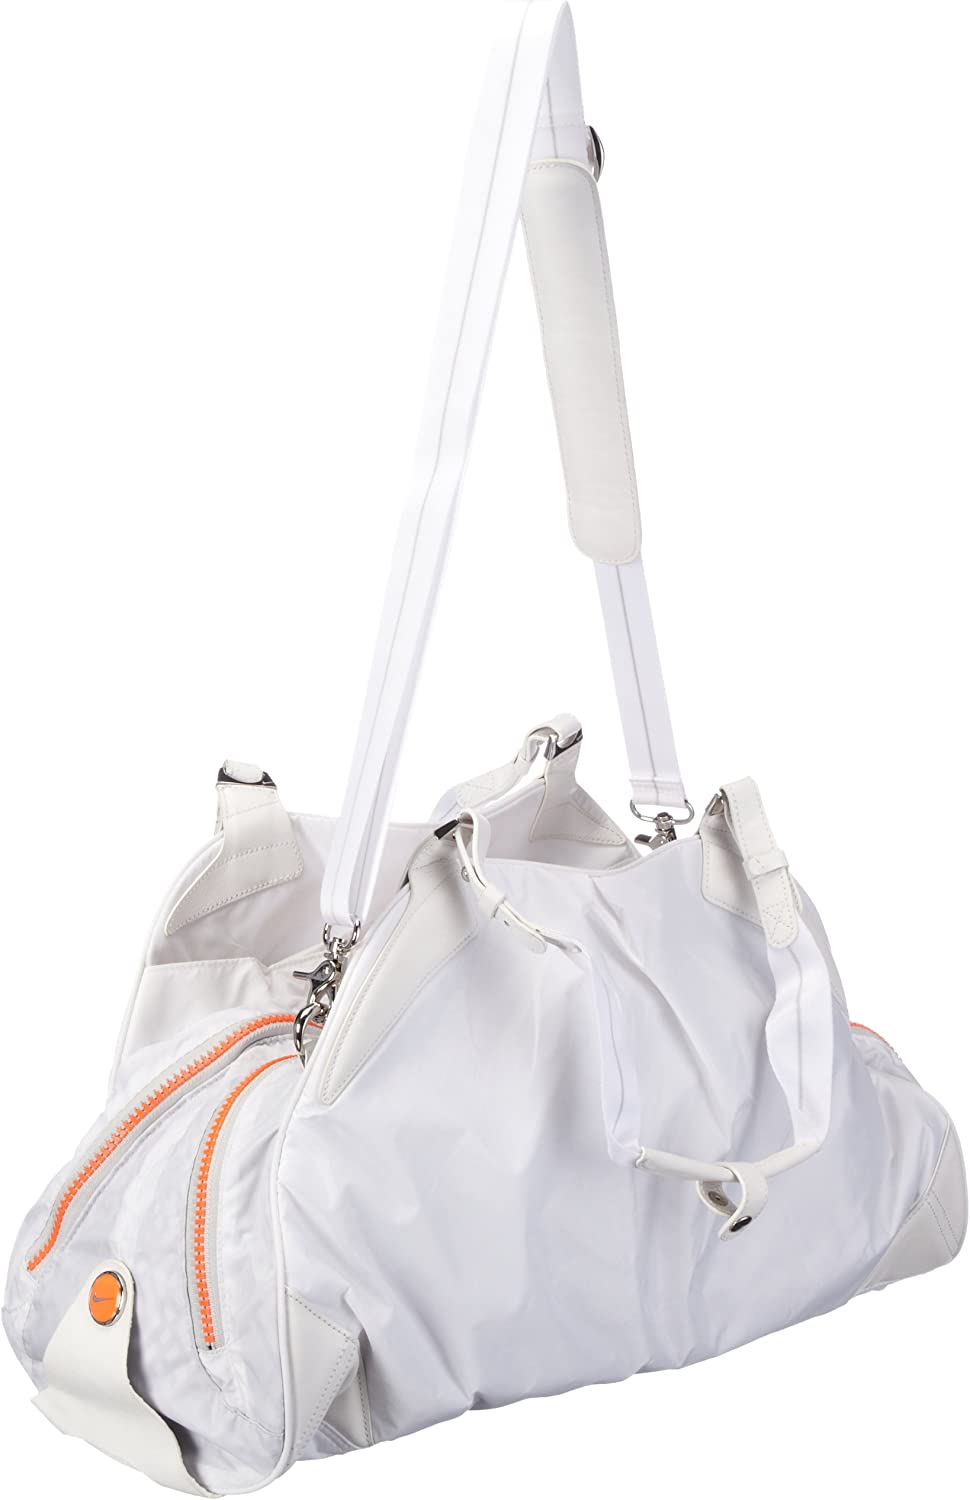 NIKE Women's Monika Standard Club Bag sports bag